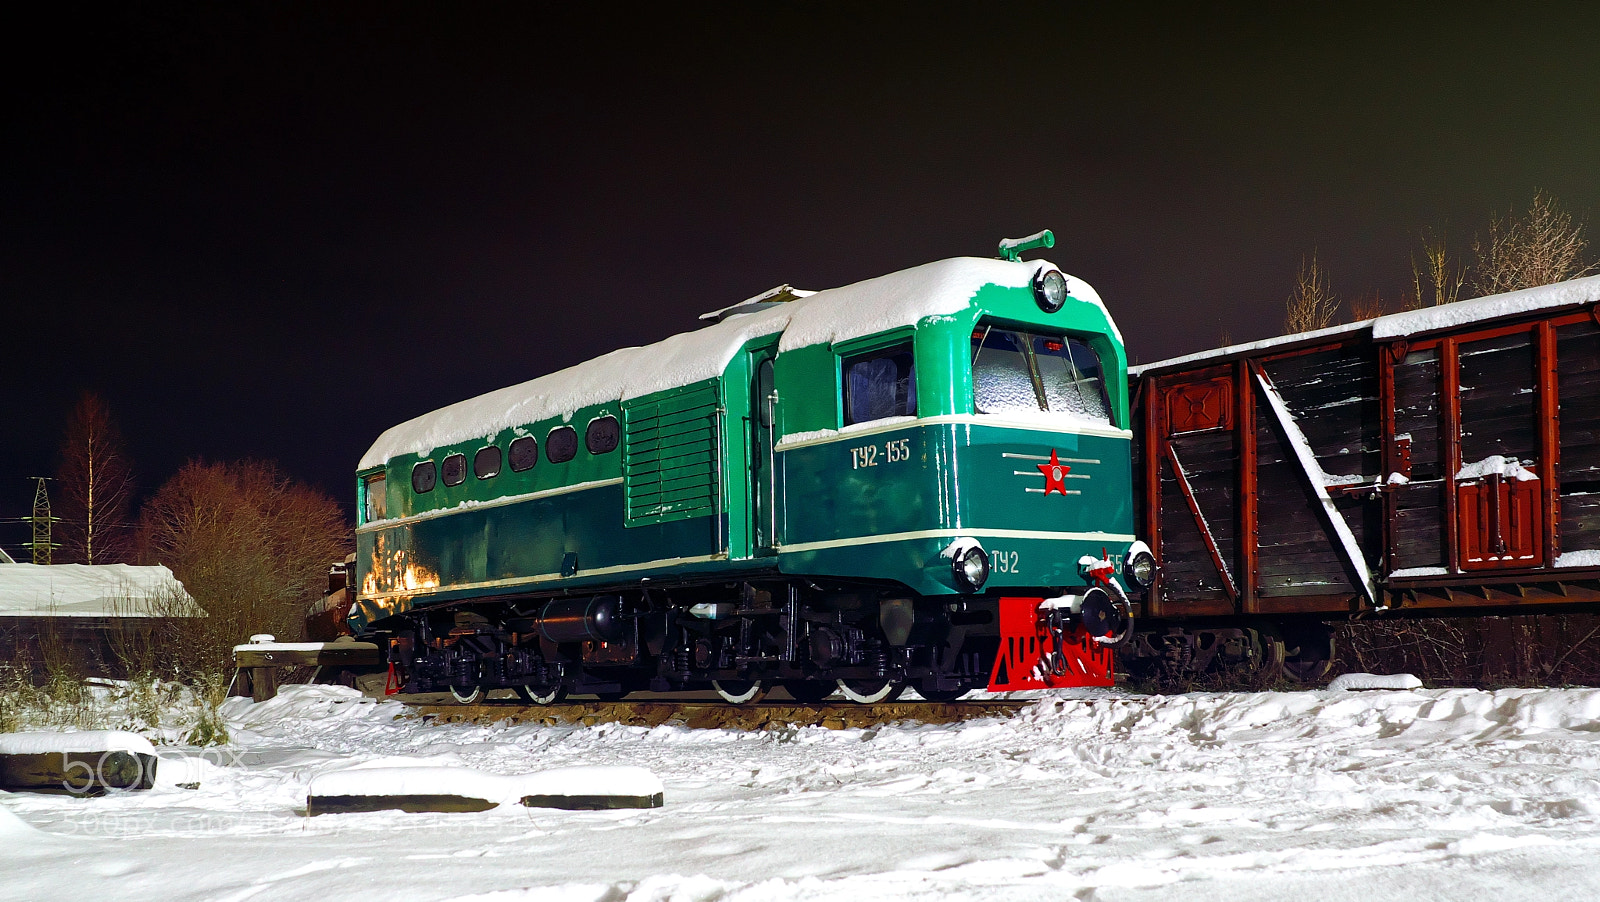 Sony ILCA-77M2 sample photo. Tu2-155 tyosovo narrow-gauge railway photography